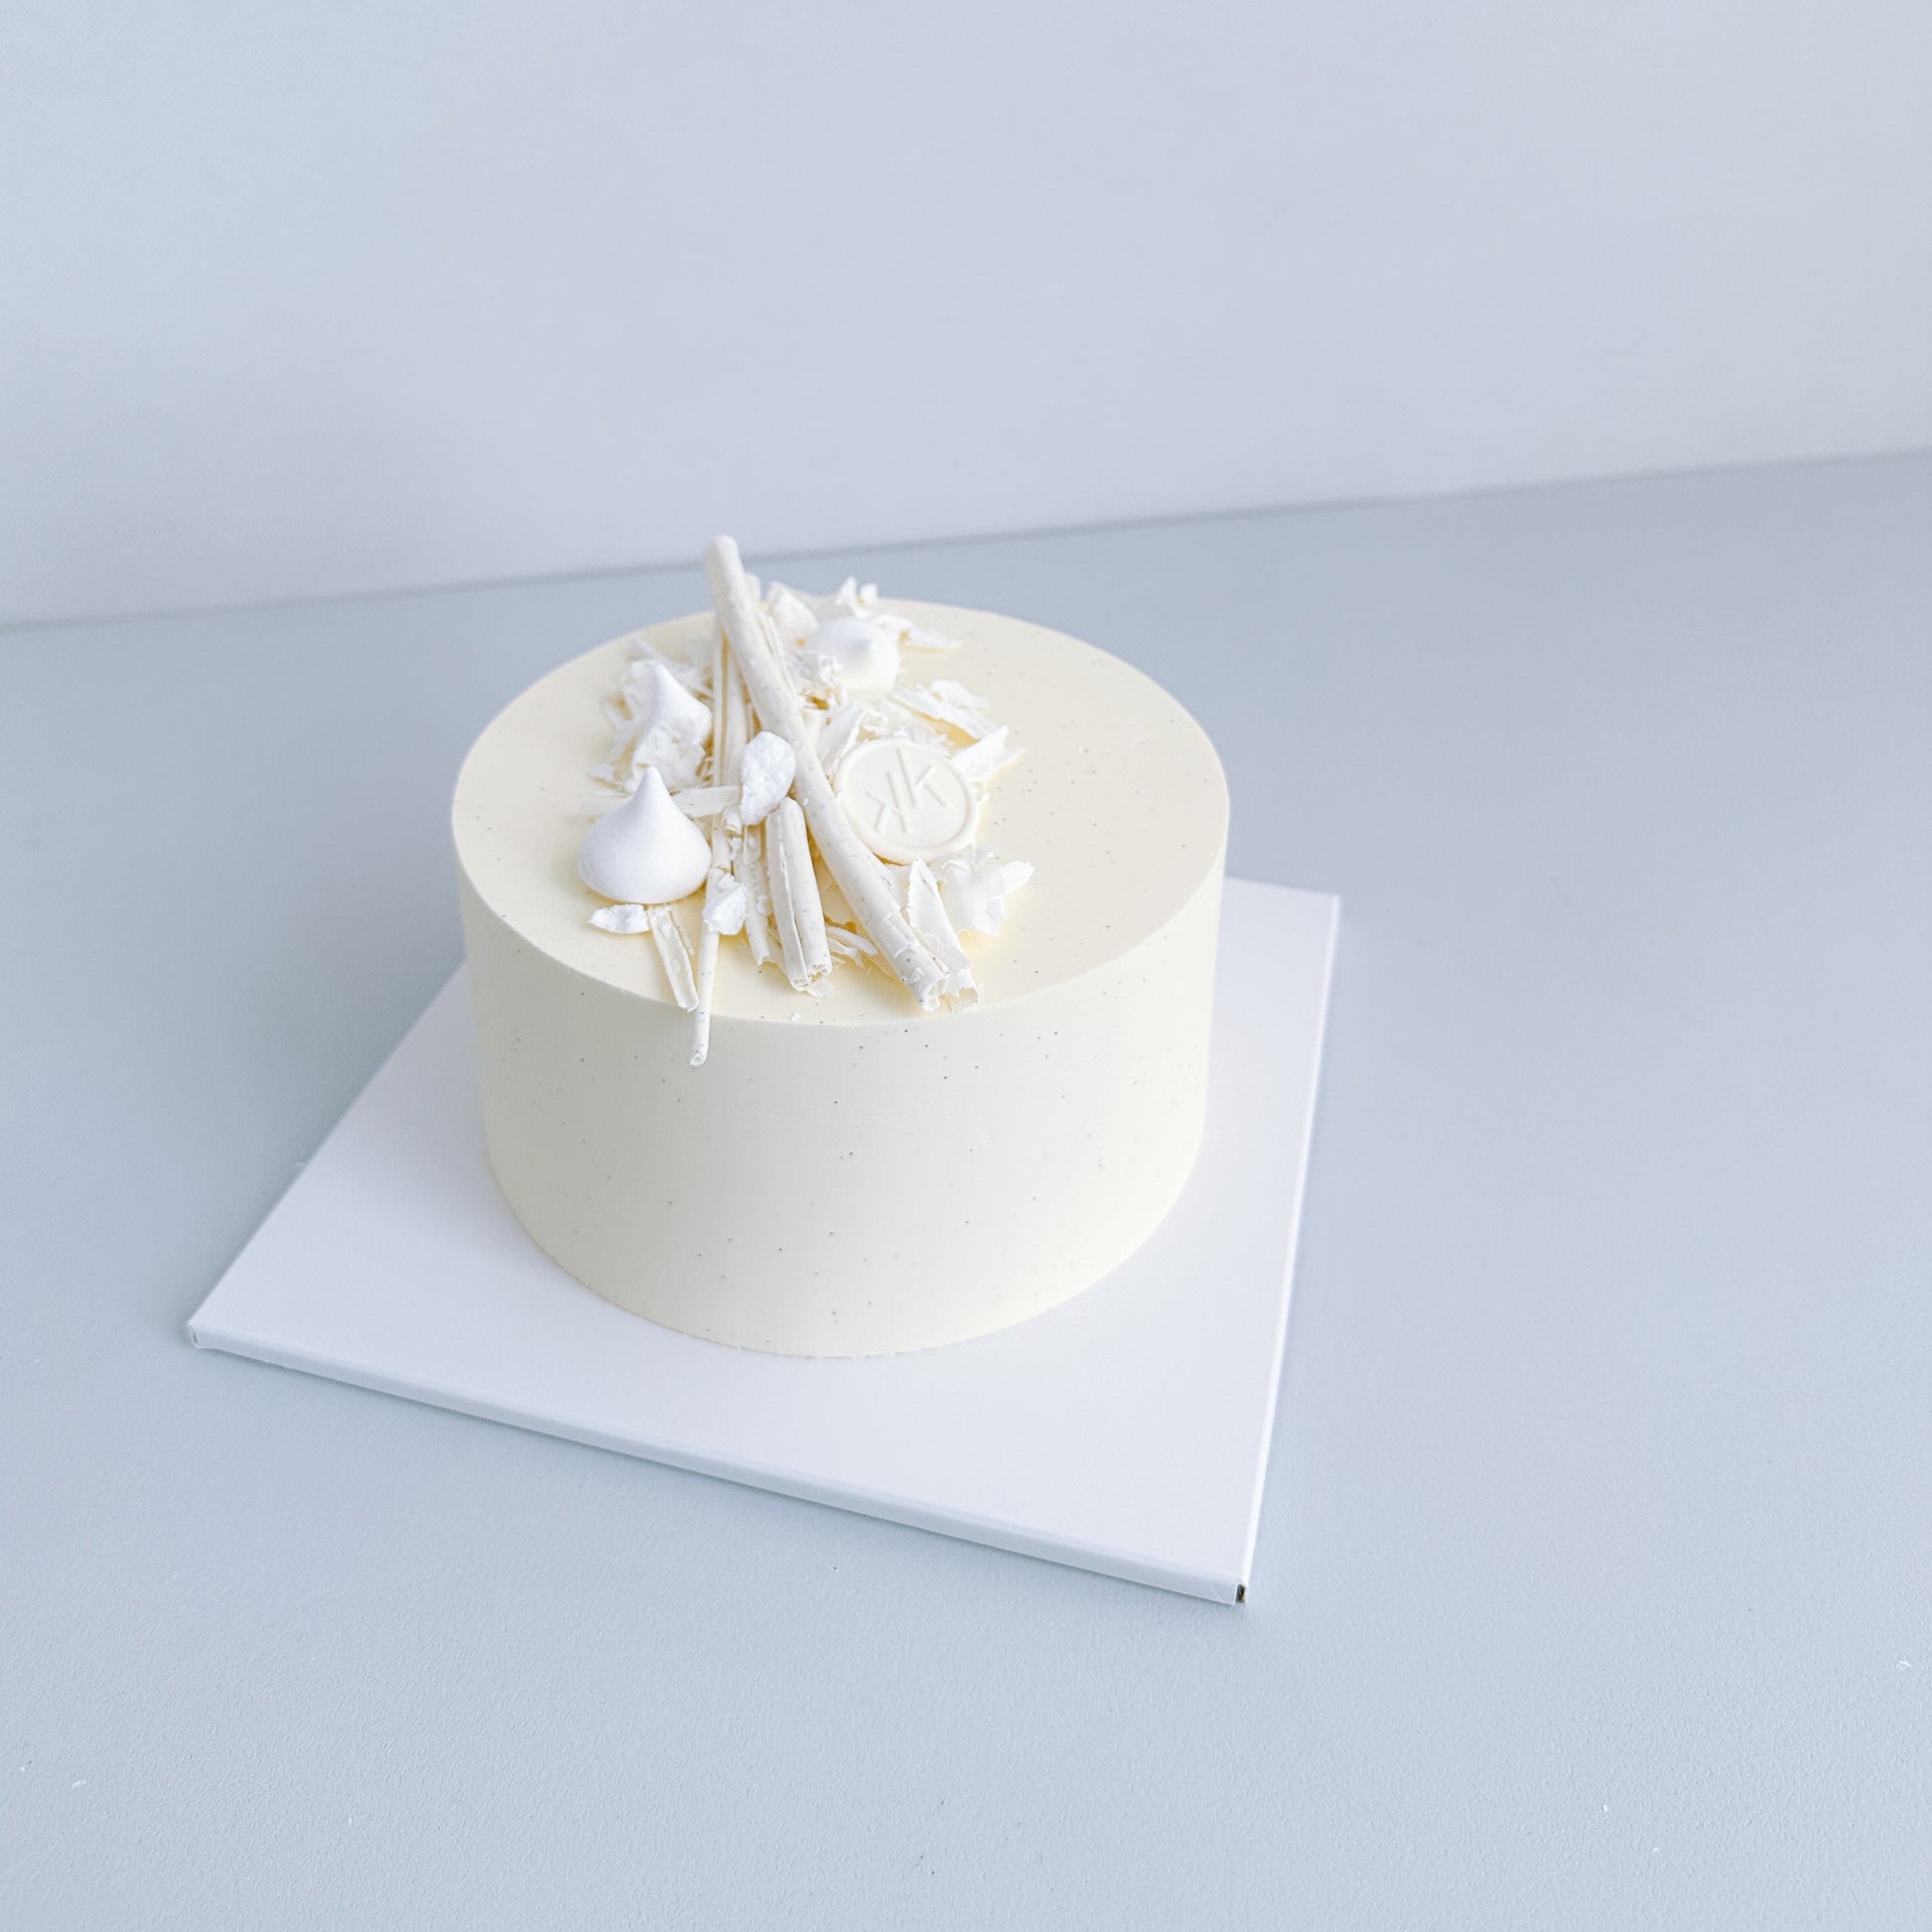 vanilla cake Auckland cakes 